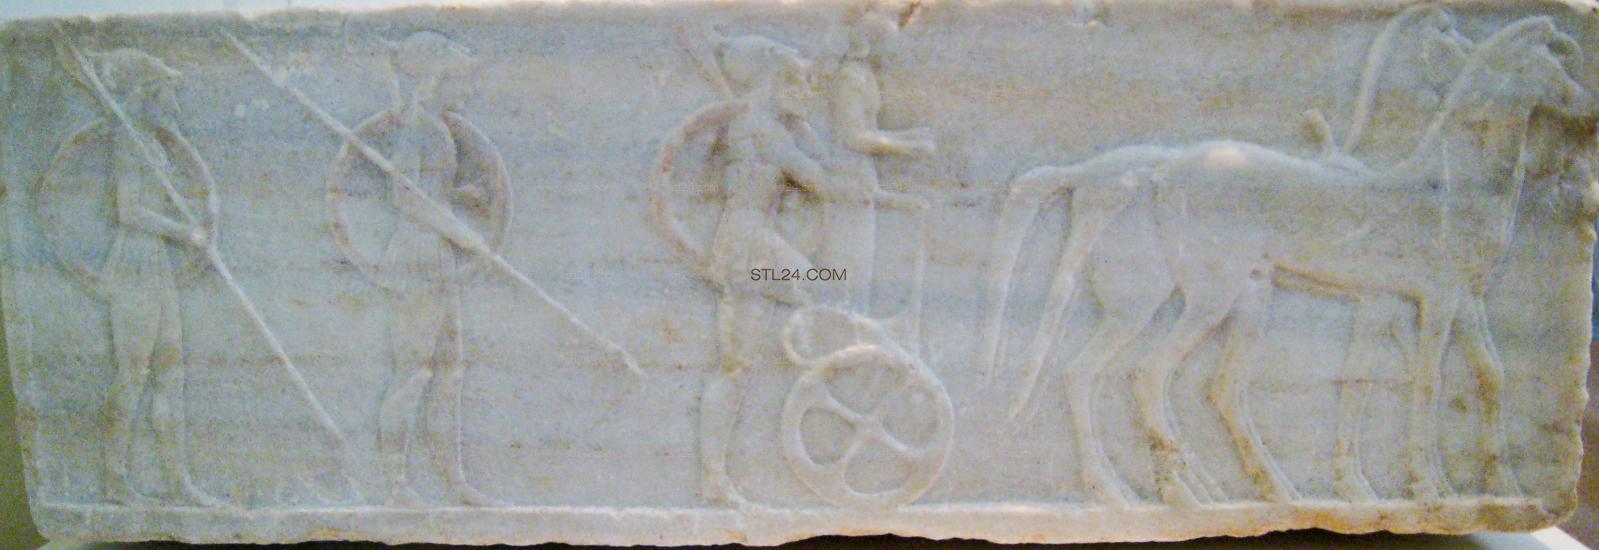 SCULPTURE OF ANCIENT GREECE_1123